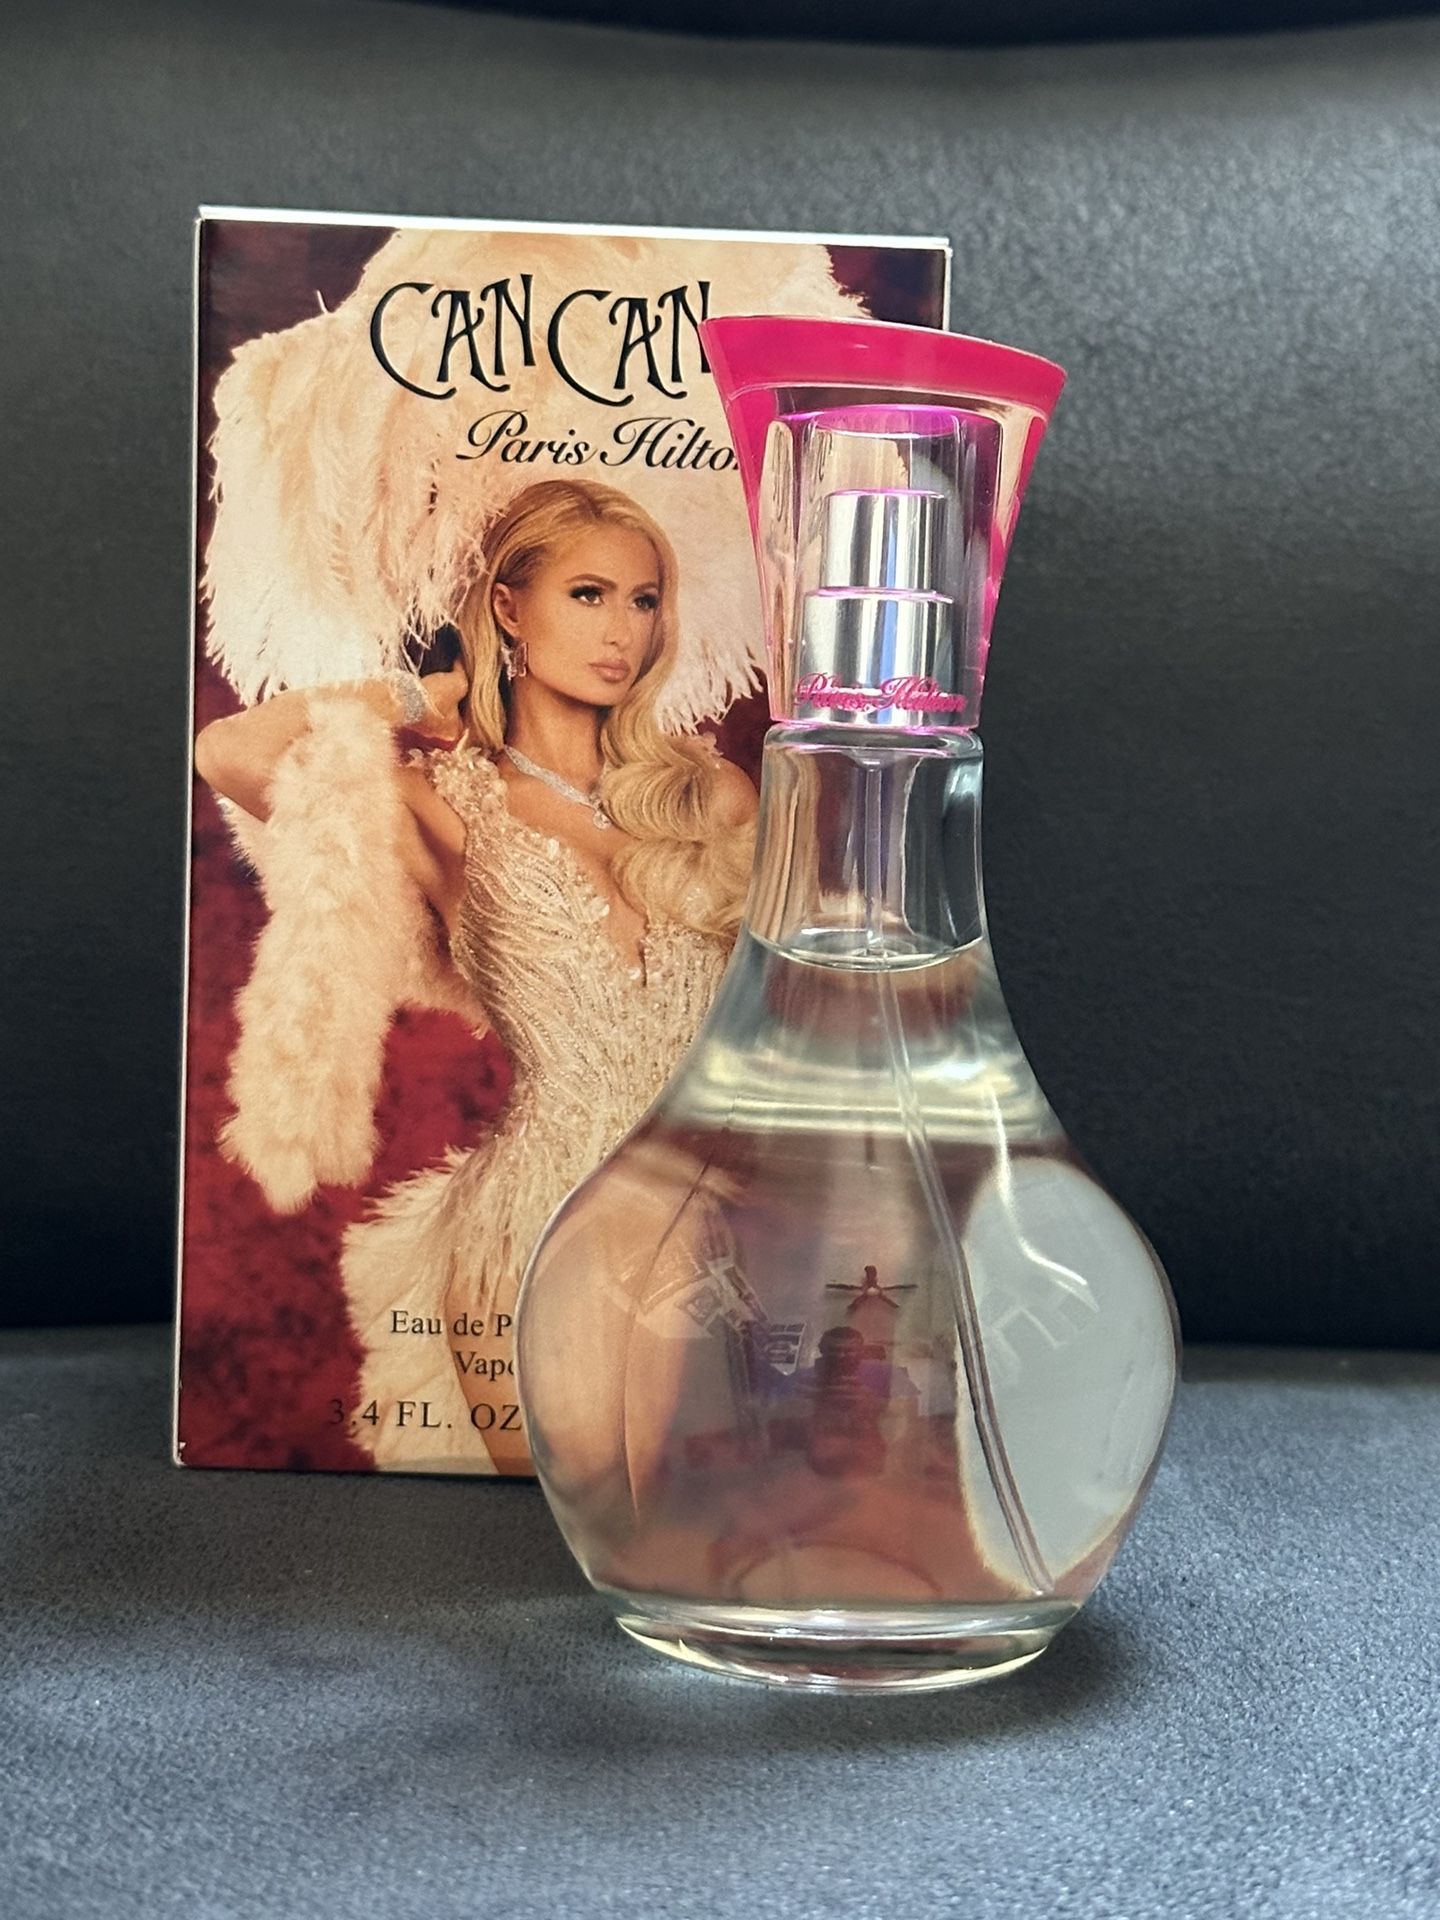 Paris Hilton Can Can Eau De Parfum Spray 3.40 oz Perfume Fragrance Brand New $65 MSRP Victoria’s Secret Body Spray Designer Scent